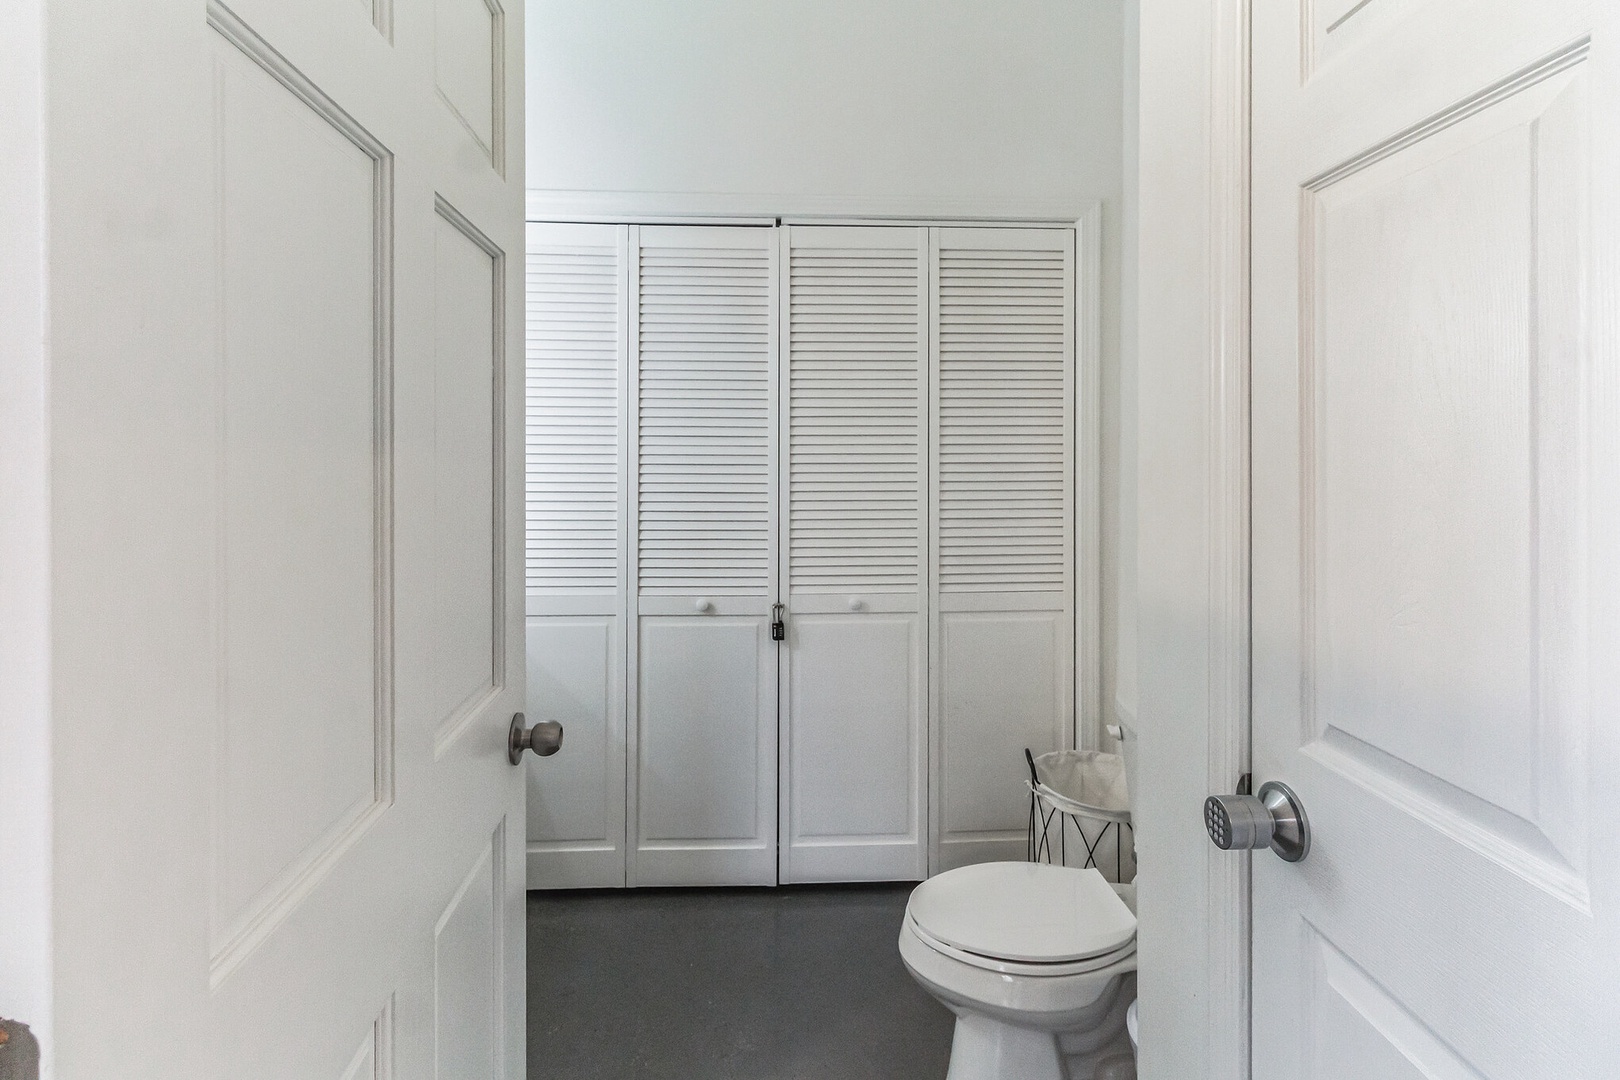 Unit C2: The 1st floor full bathroom offers a single vanity & glass shower